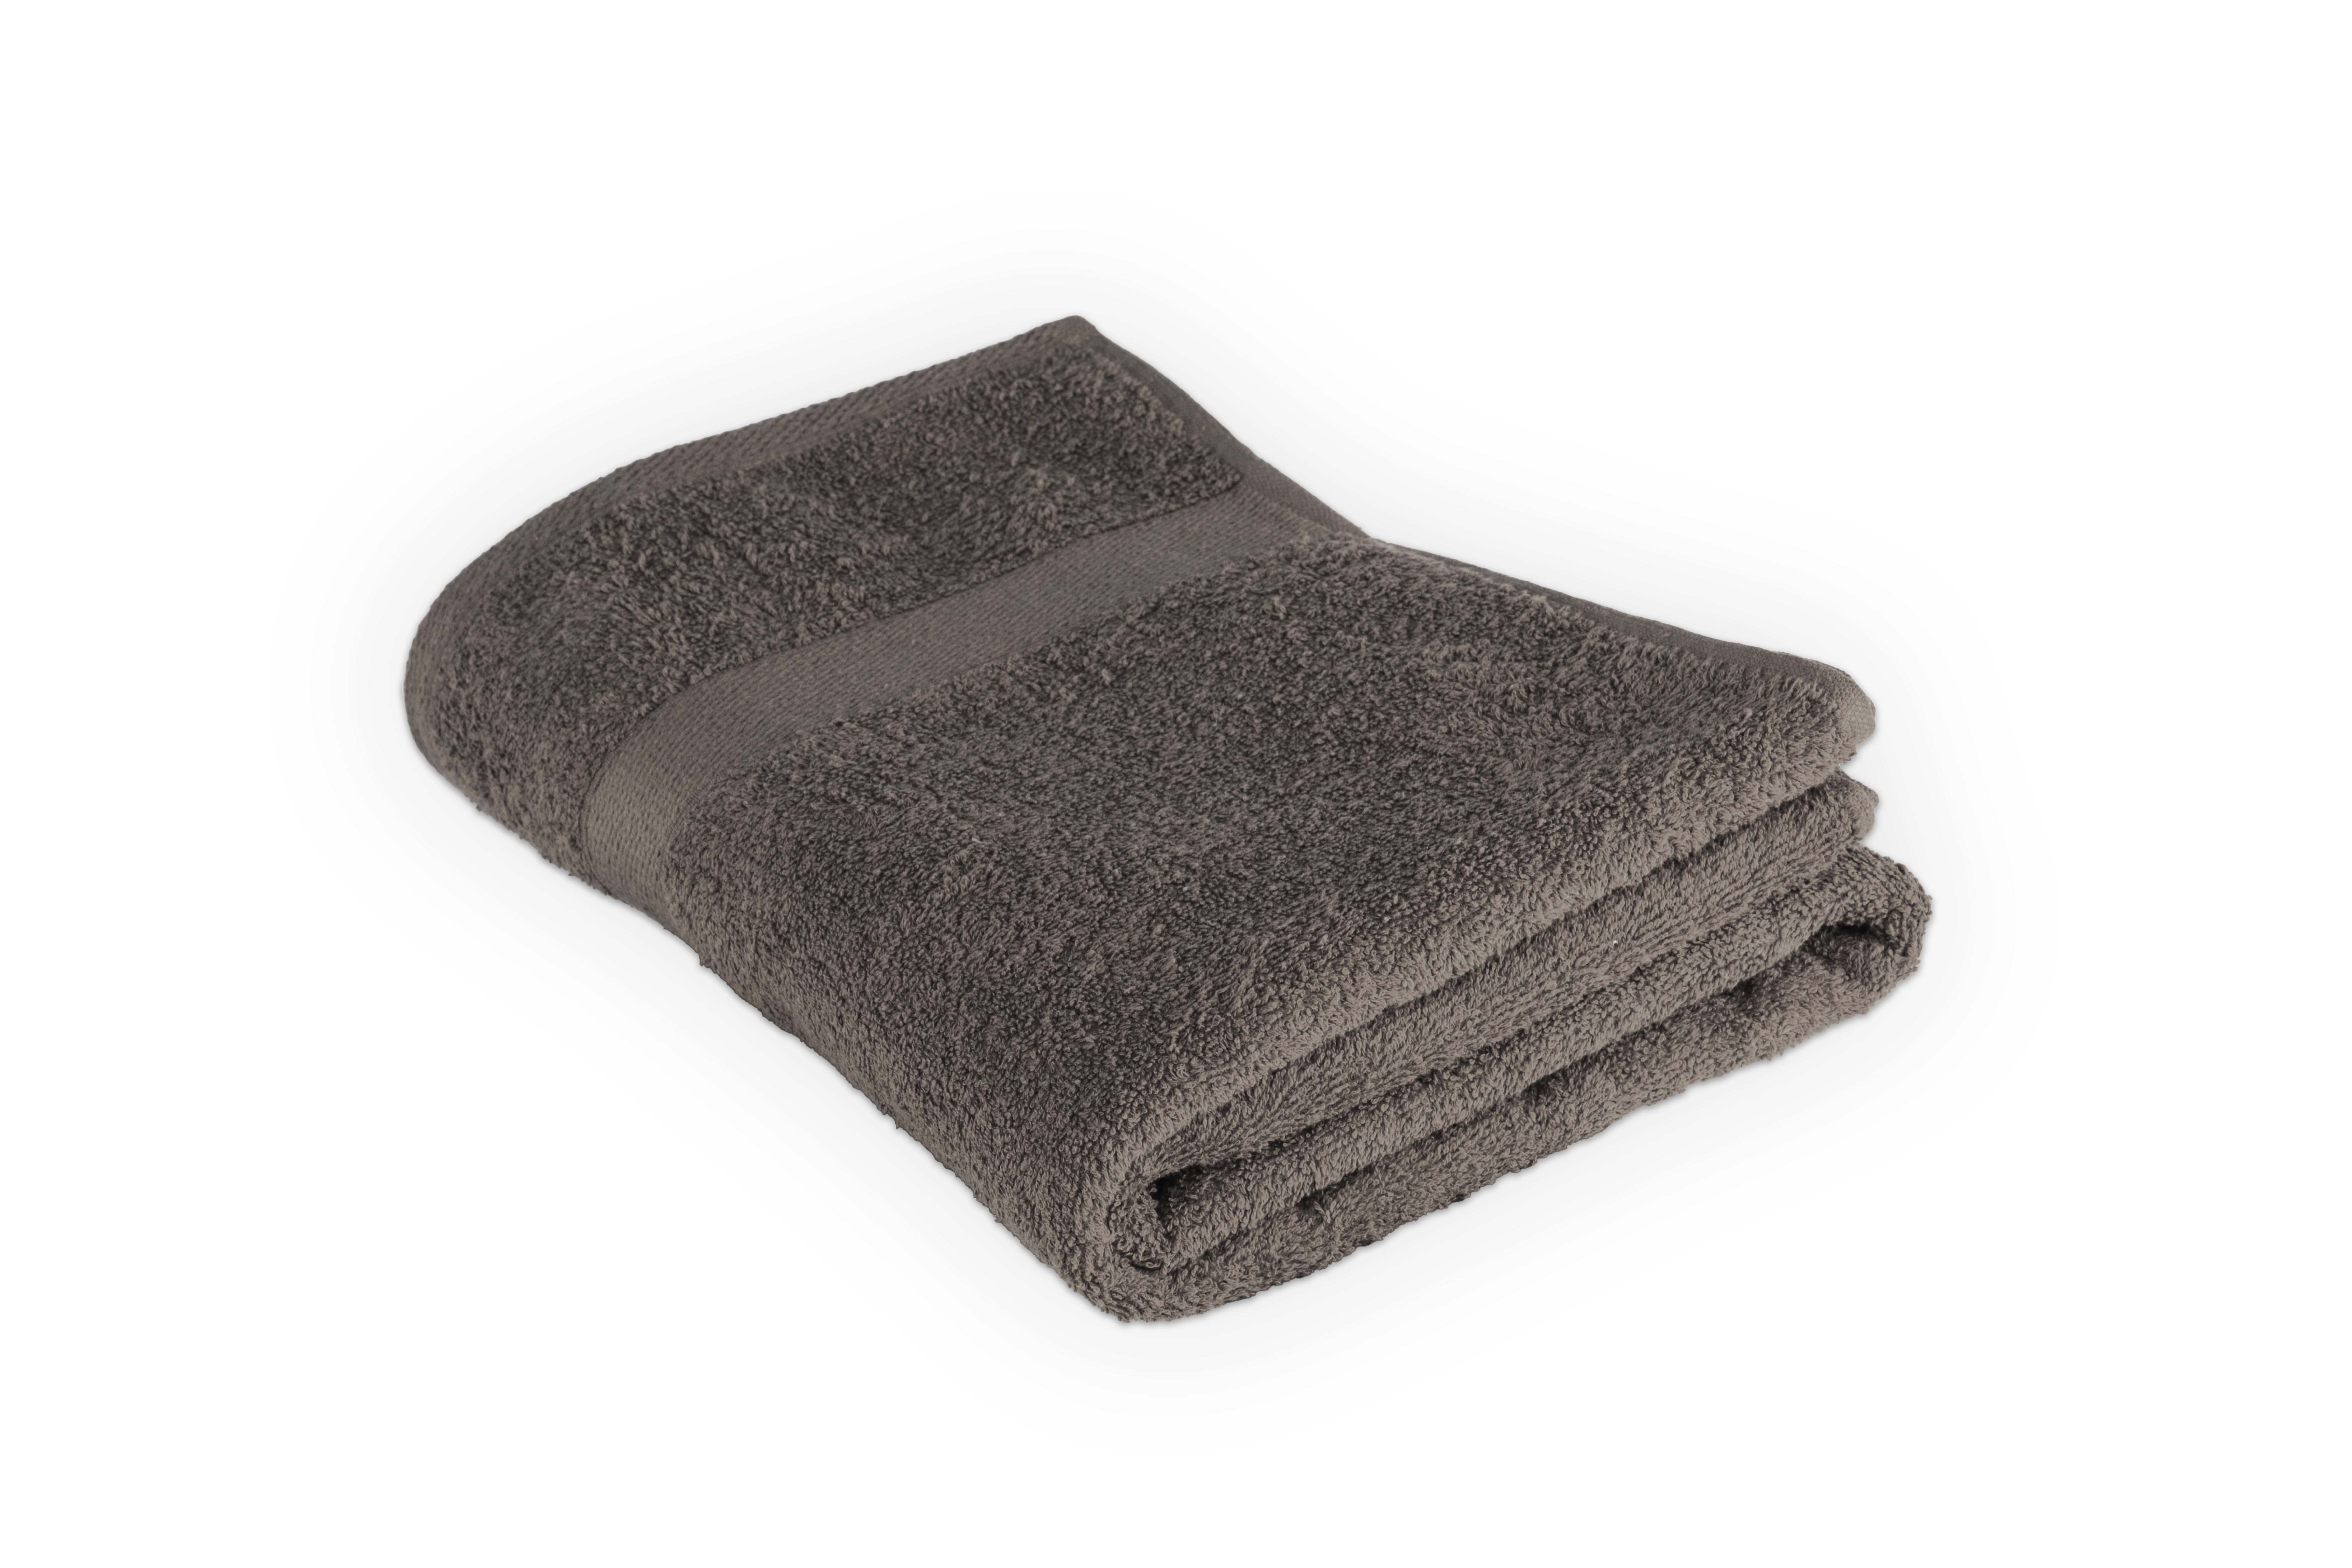 Shower towel 100x150cm, antracite grey